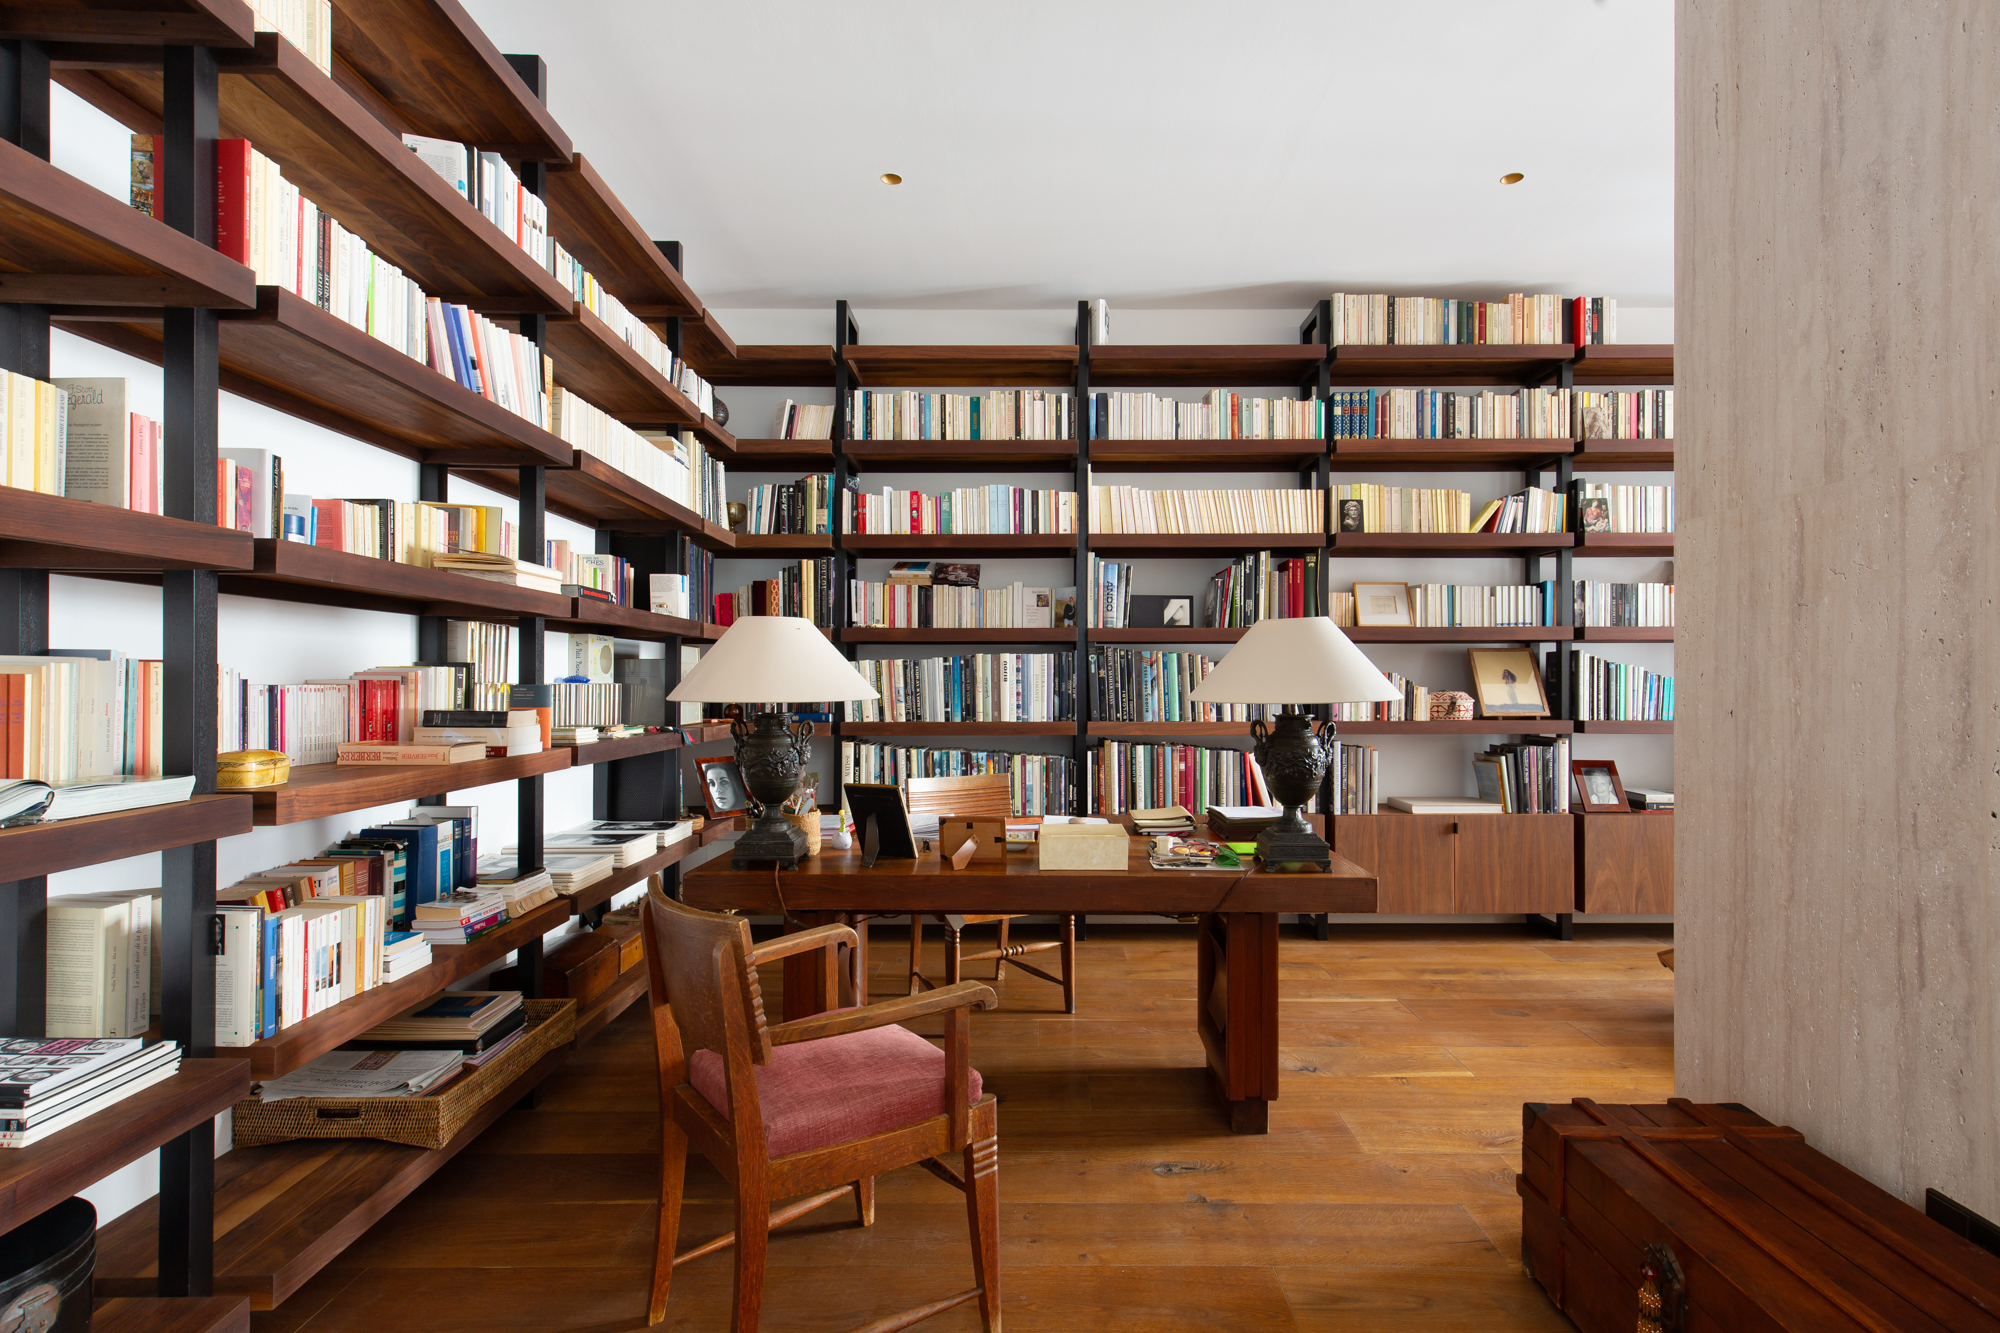 Interior Library and bookcase of Palacio Orfeo